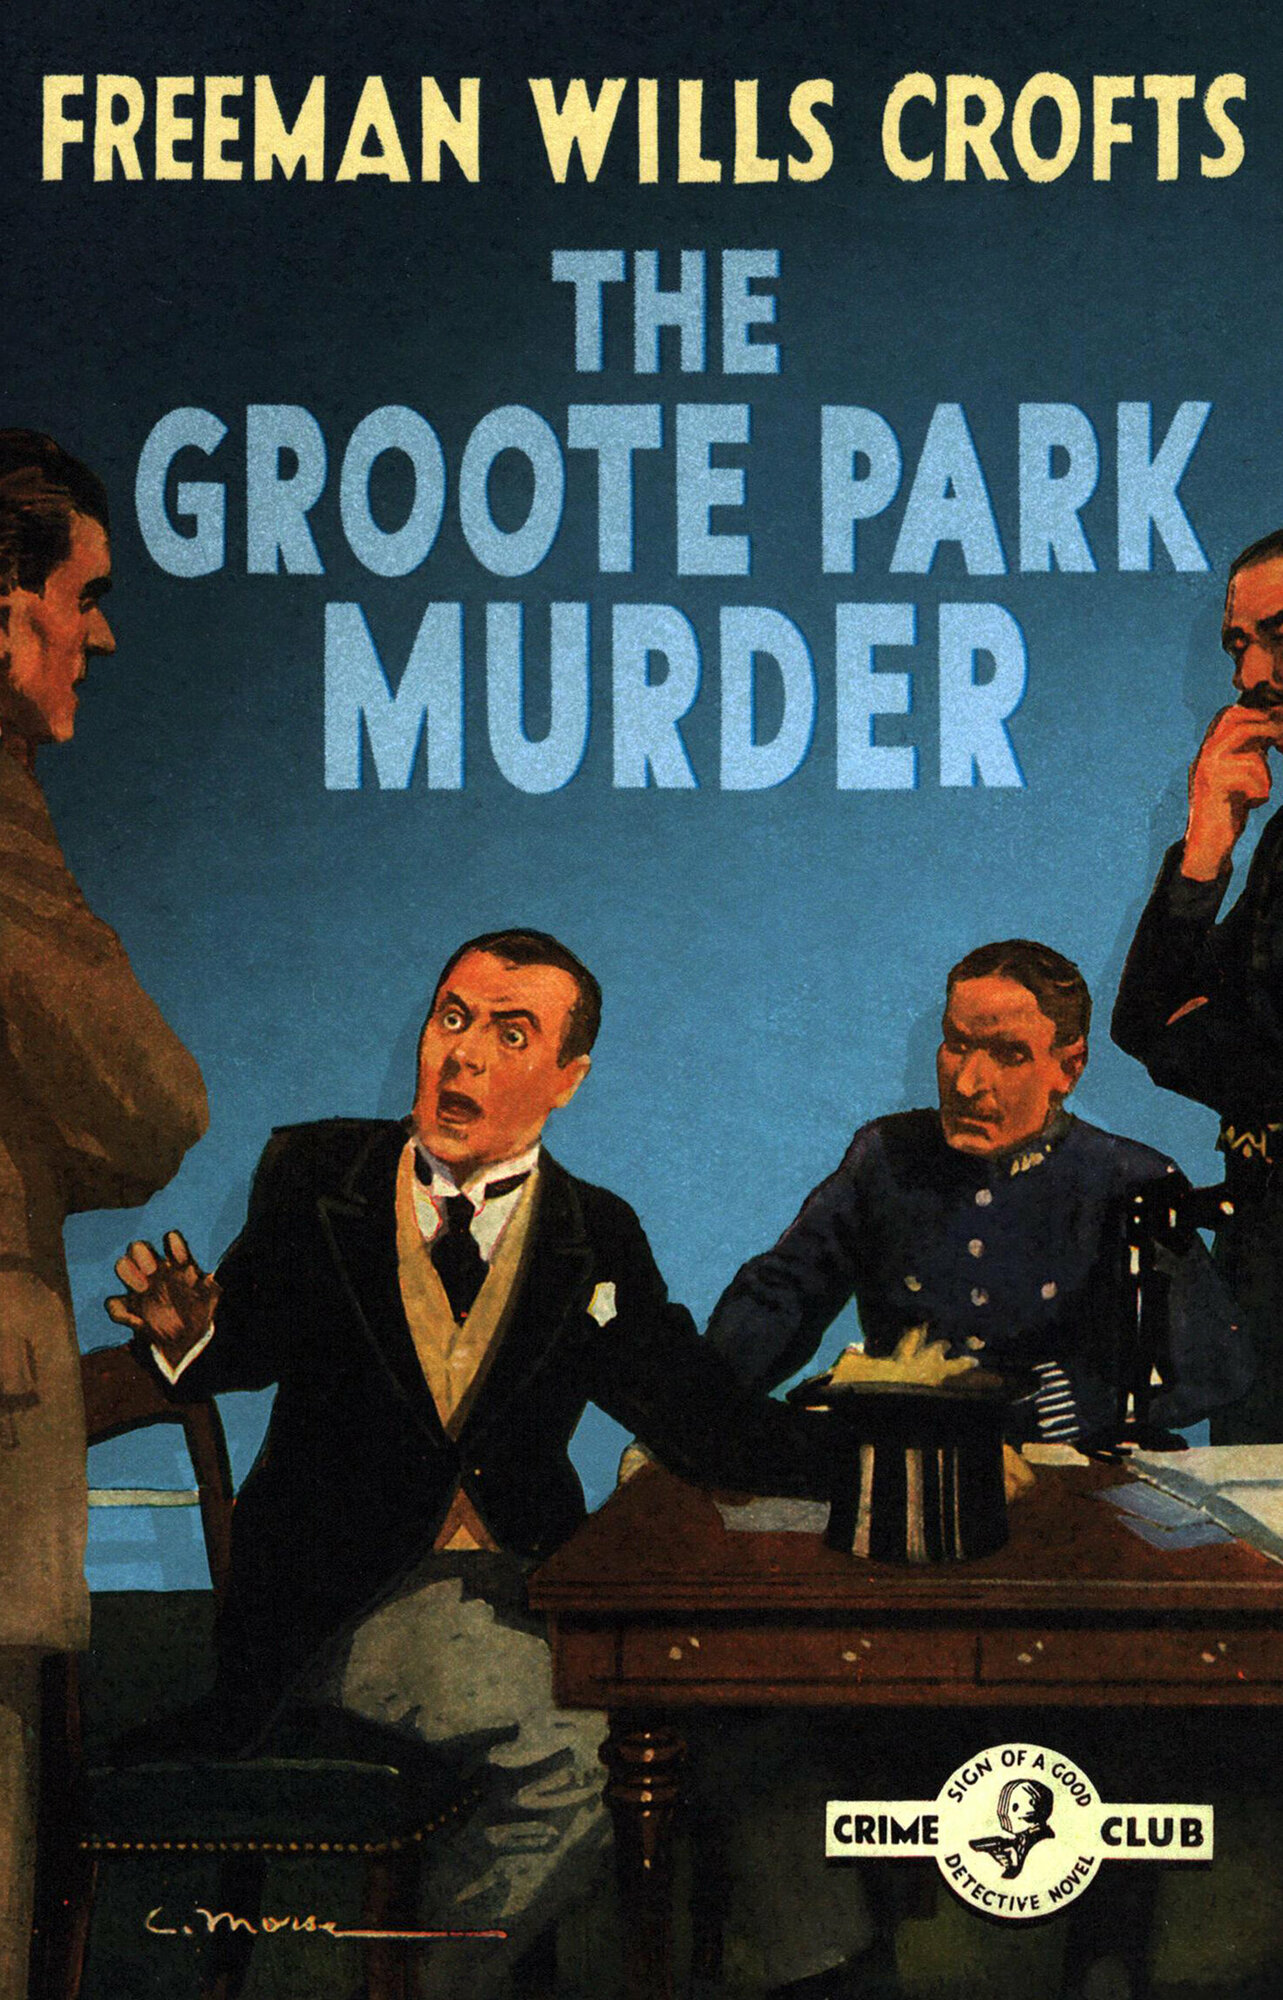 The Groote Park Murder (Wills Crofts Freeman) - фото №1